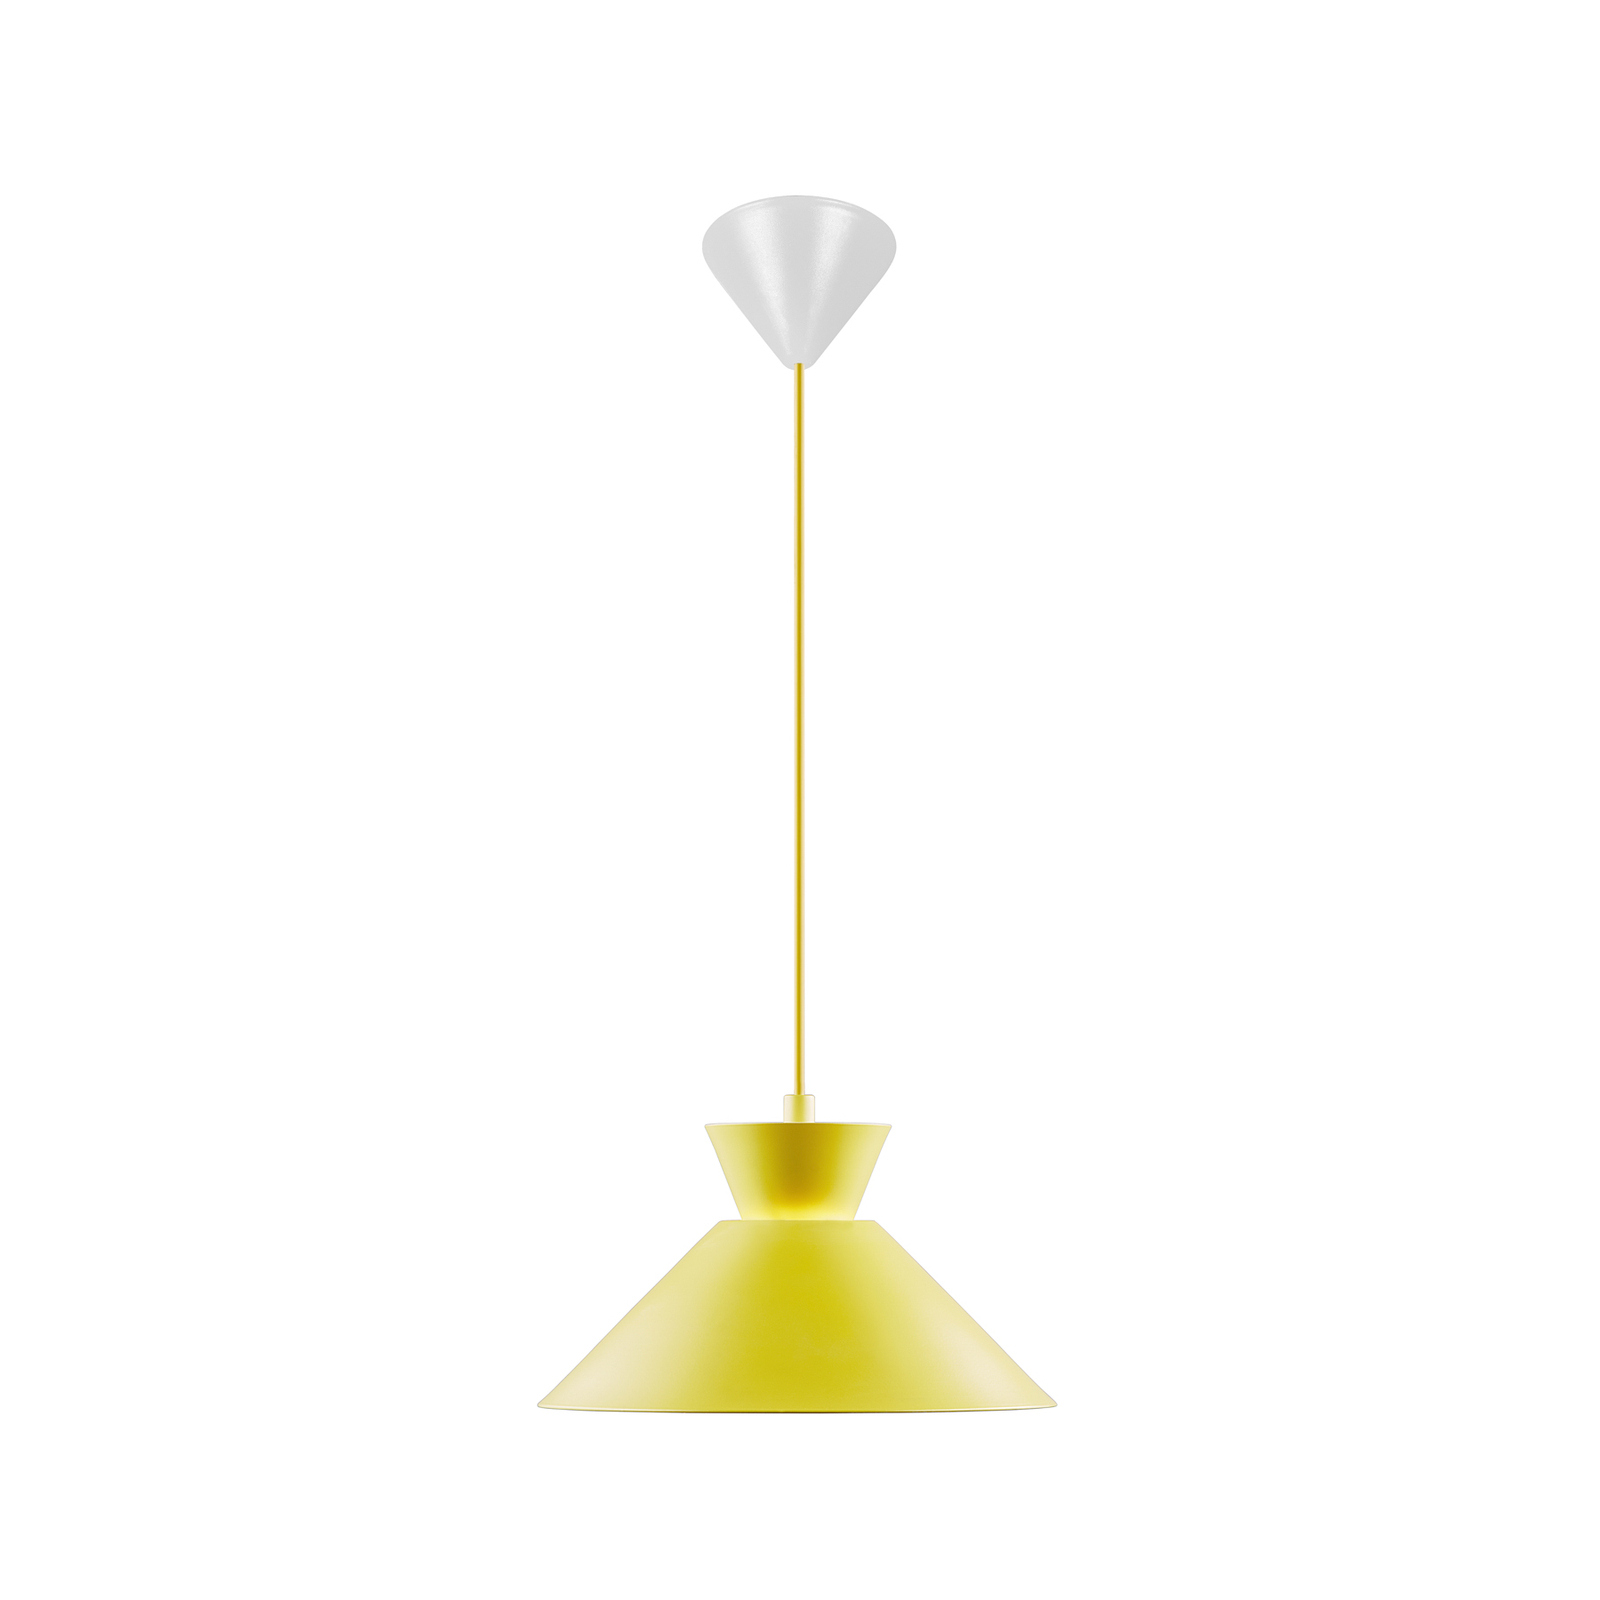 Dial pendant light with metal shade, yellow, Ø 25 cm